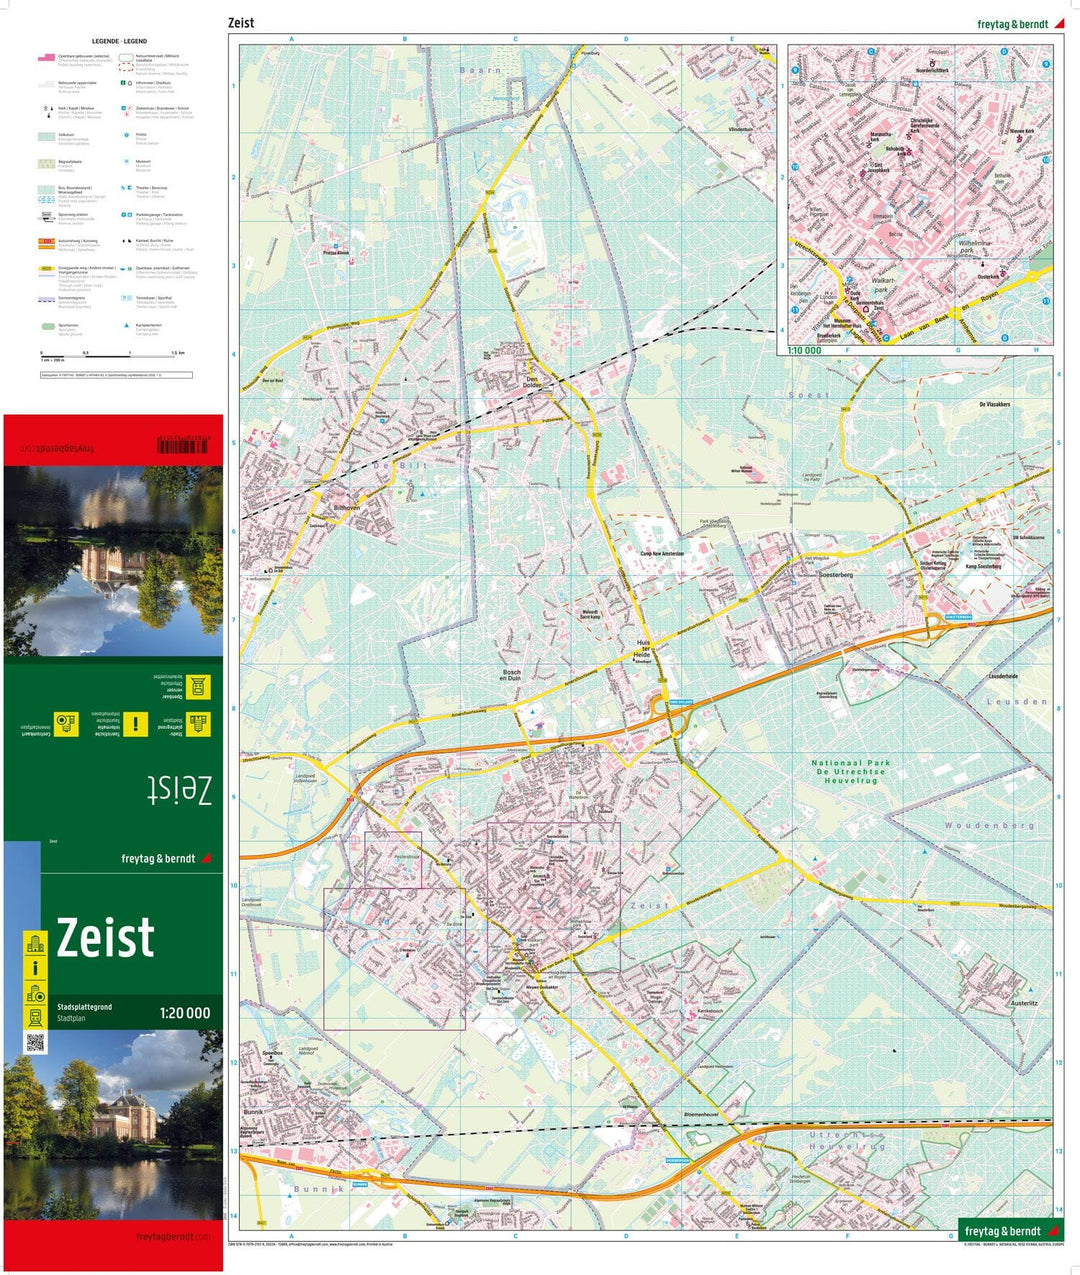 Plan détaillé - Zeist | Freytag & Berndt carte pliée Freytag & Berndt 